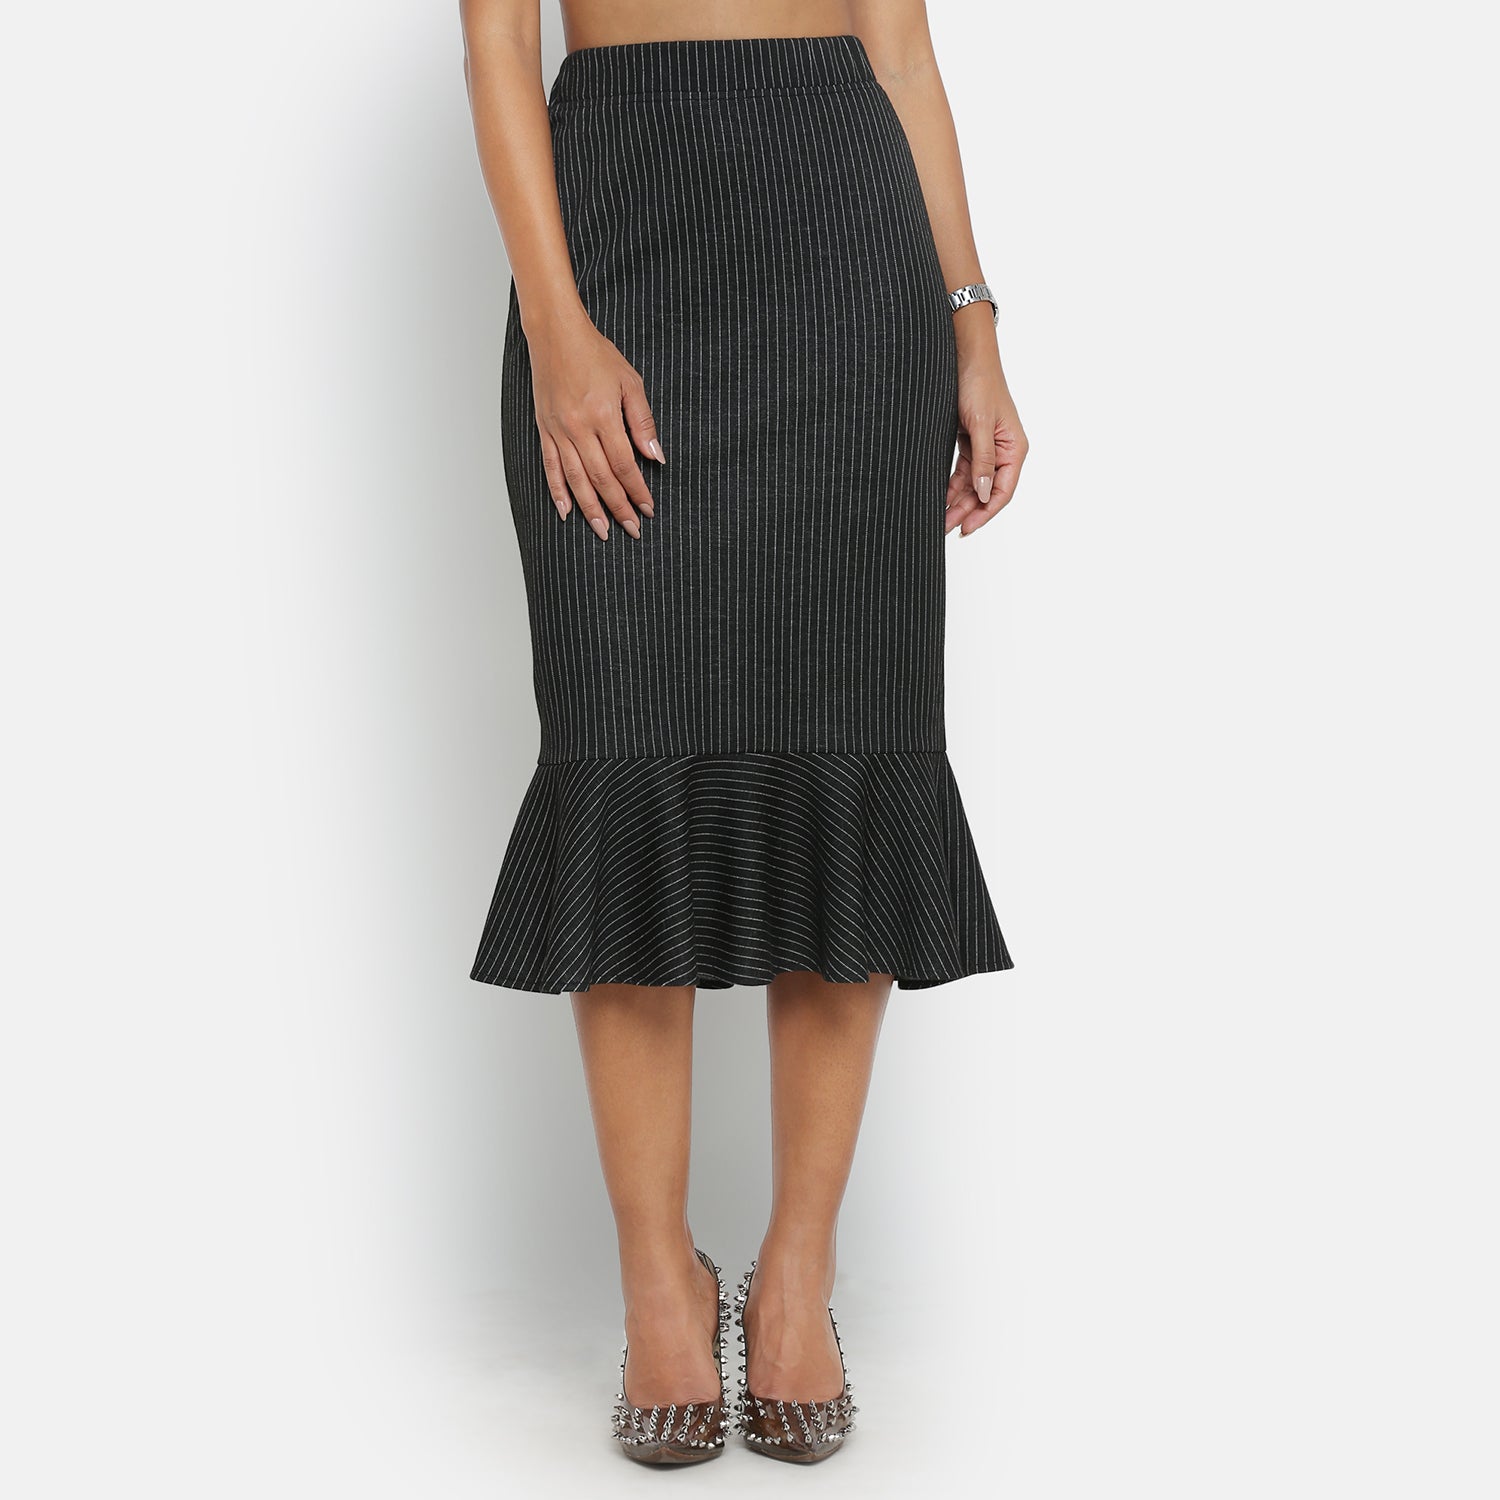 Dark Grey Knit Skirt With Frill